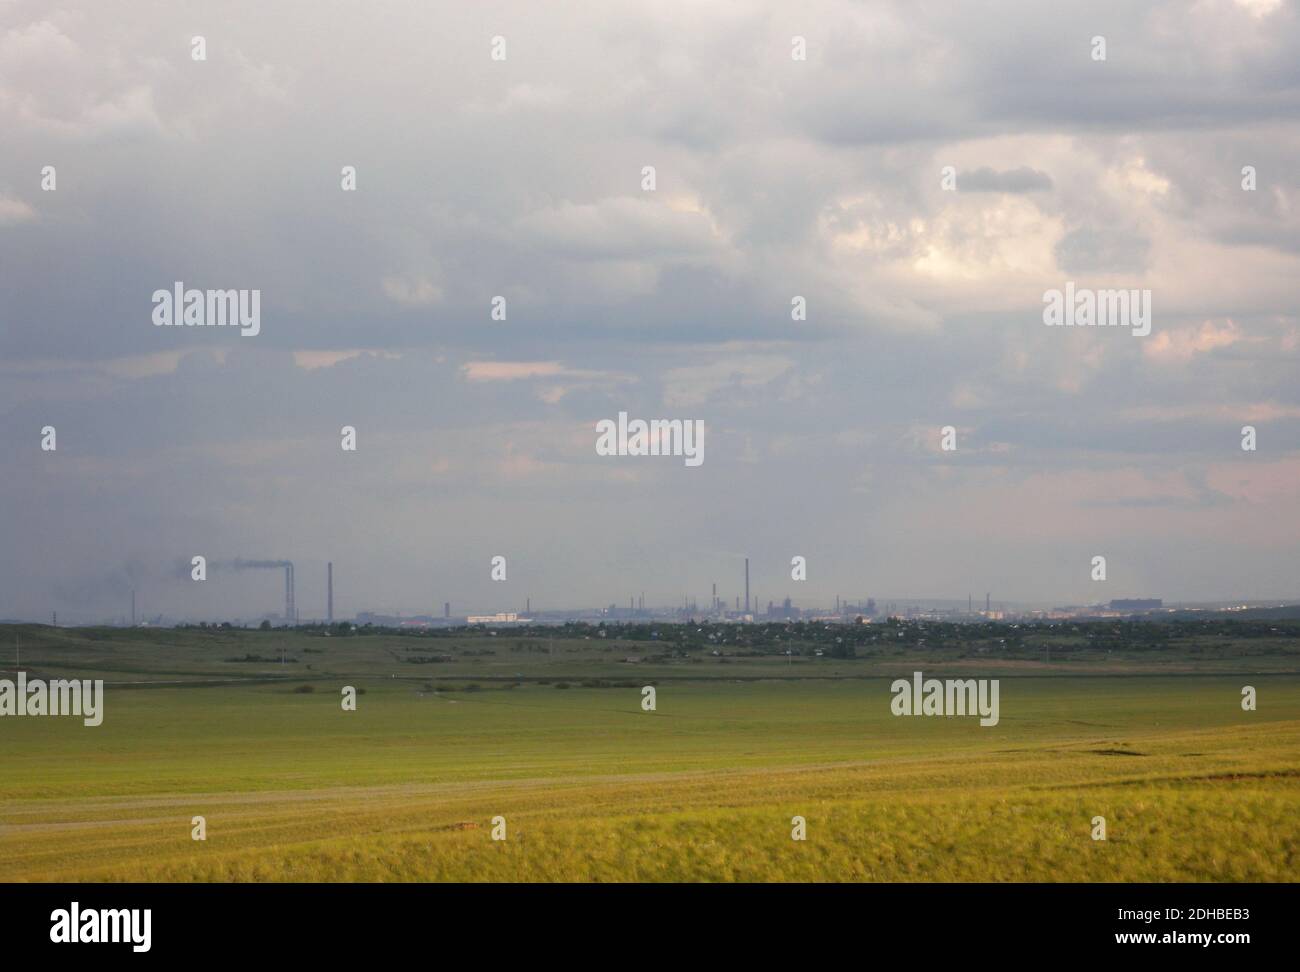 industrial skyline in steppe habitat  Karaganda, Qaraghandy province, Kazakhstan   June 2009 Stock Photo